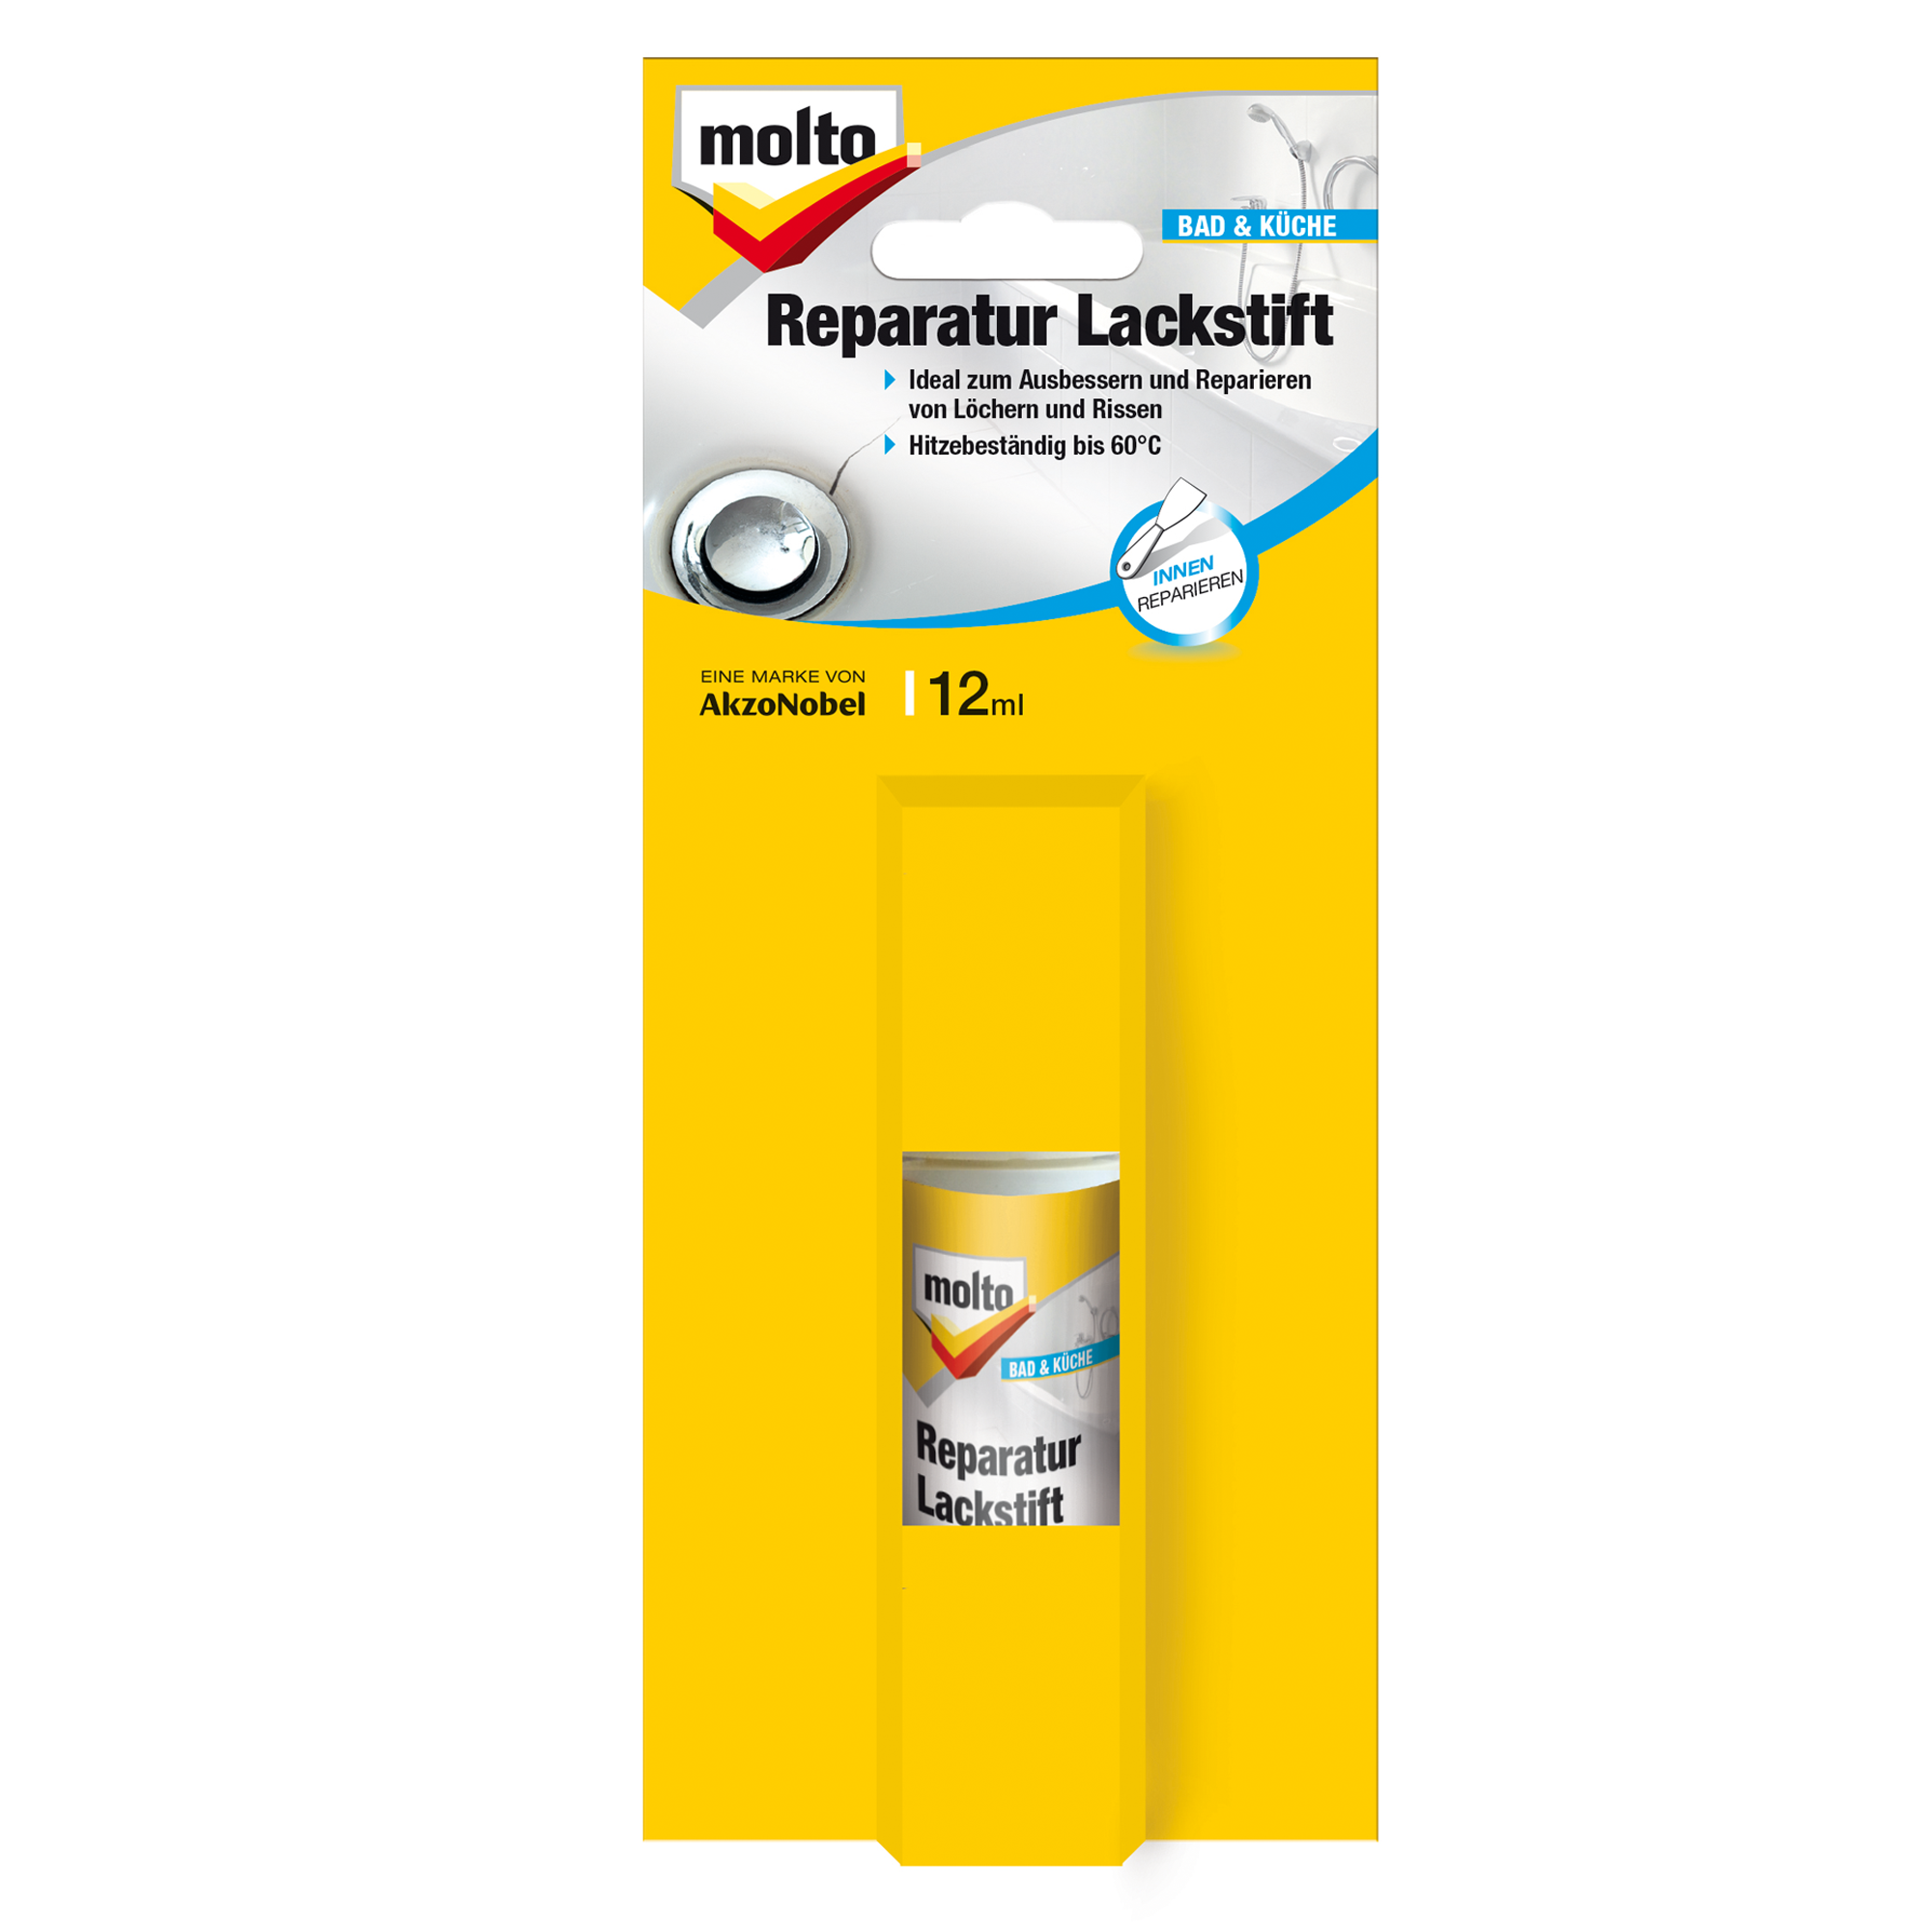 Reparatur-Lackstift 12 ml + product picture